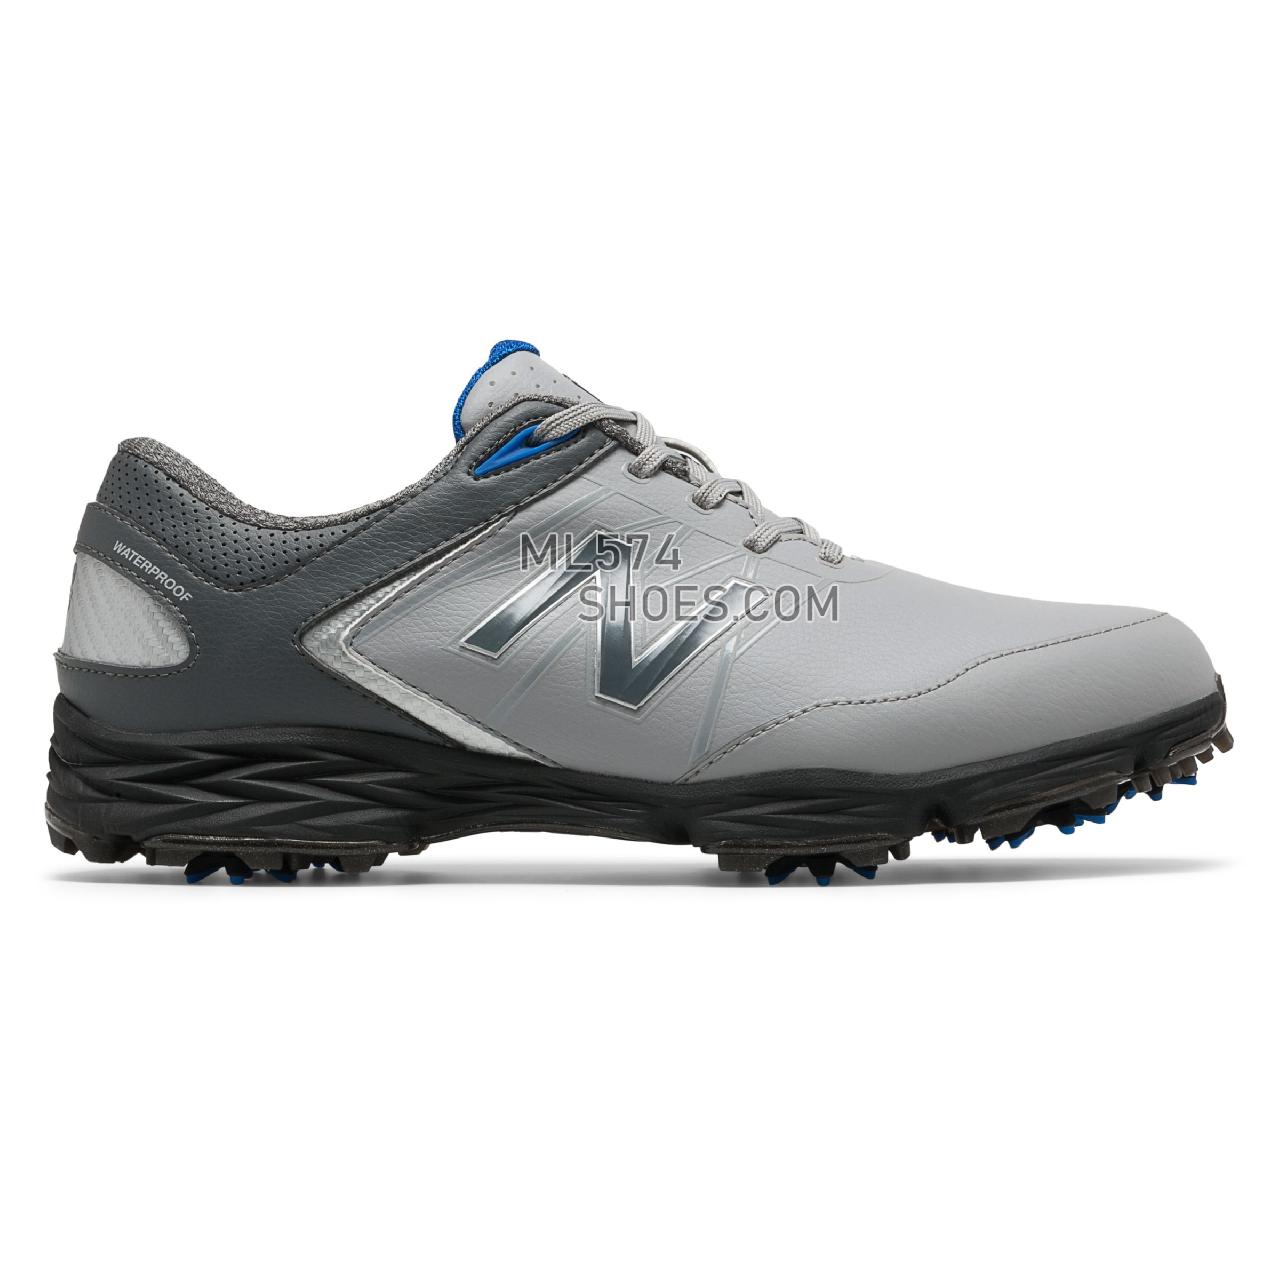 New Balance Striker - Men's Golf - Grey with Blue - NBG2005GB